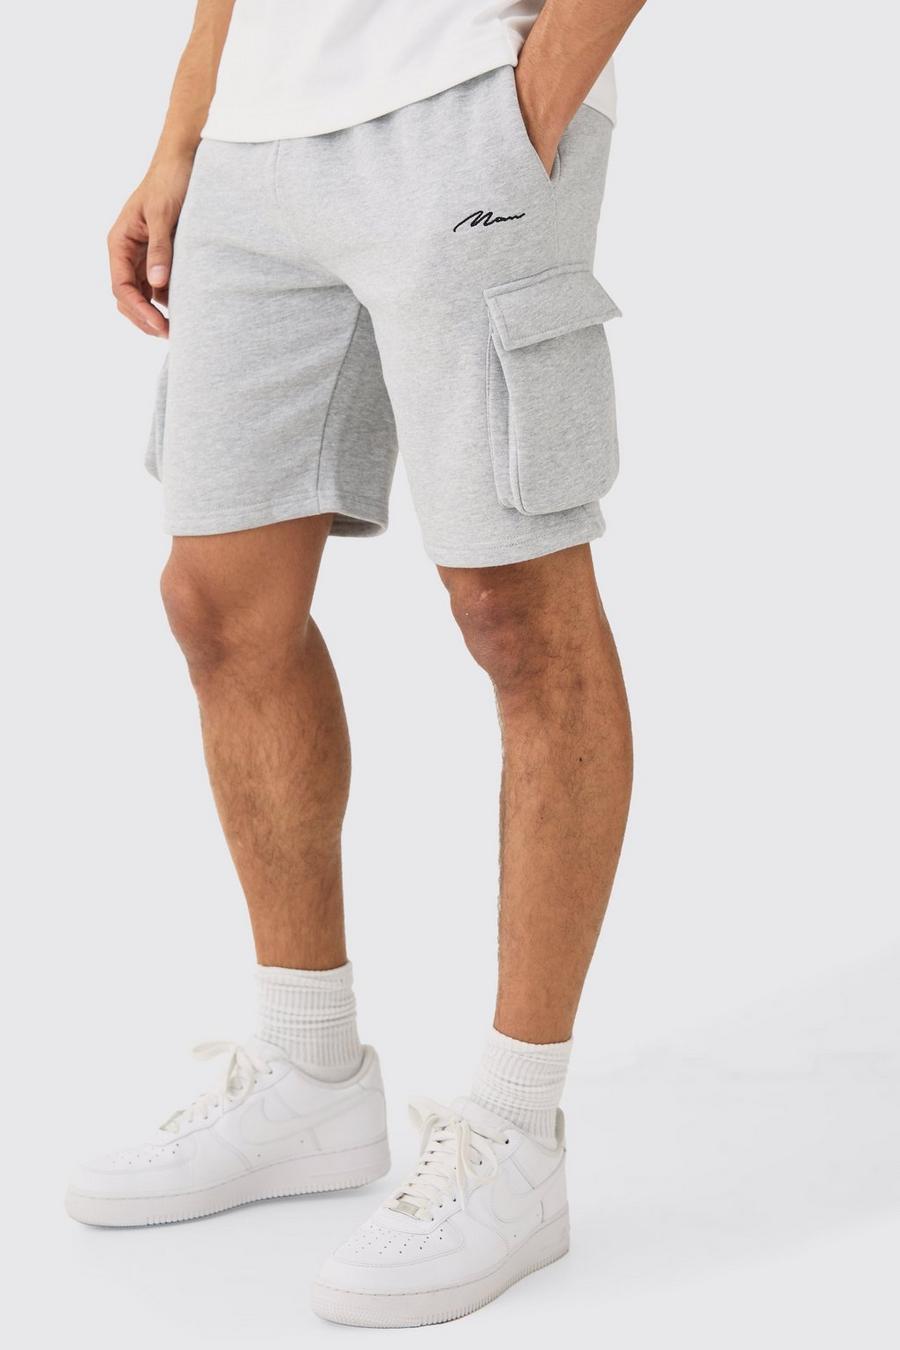 Lockere mittellang Man Signature Cargo-Shorts, Grey marl